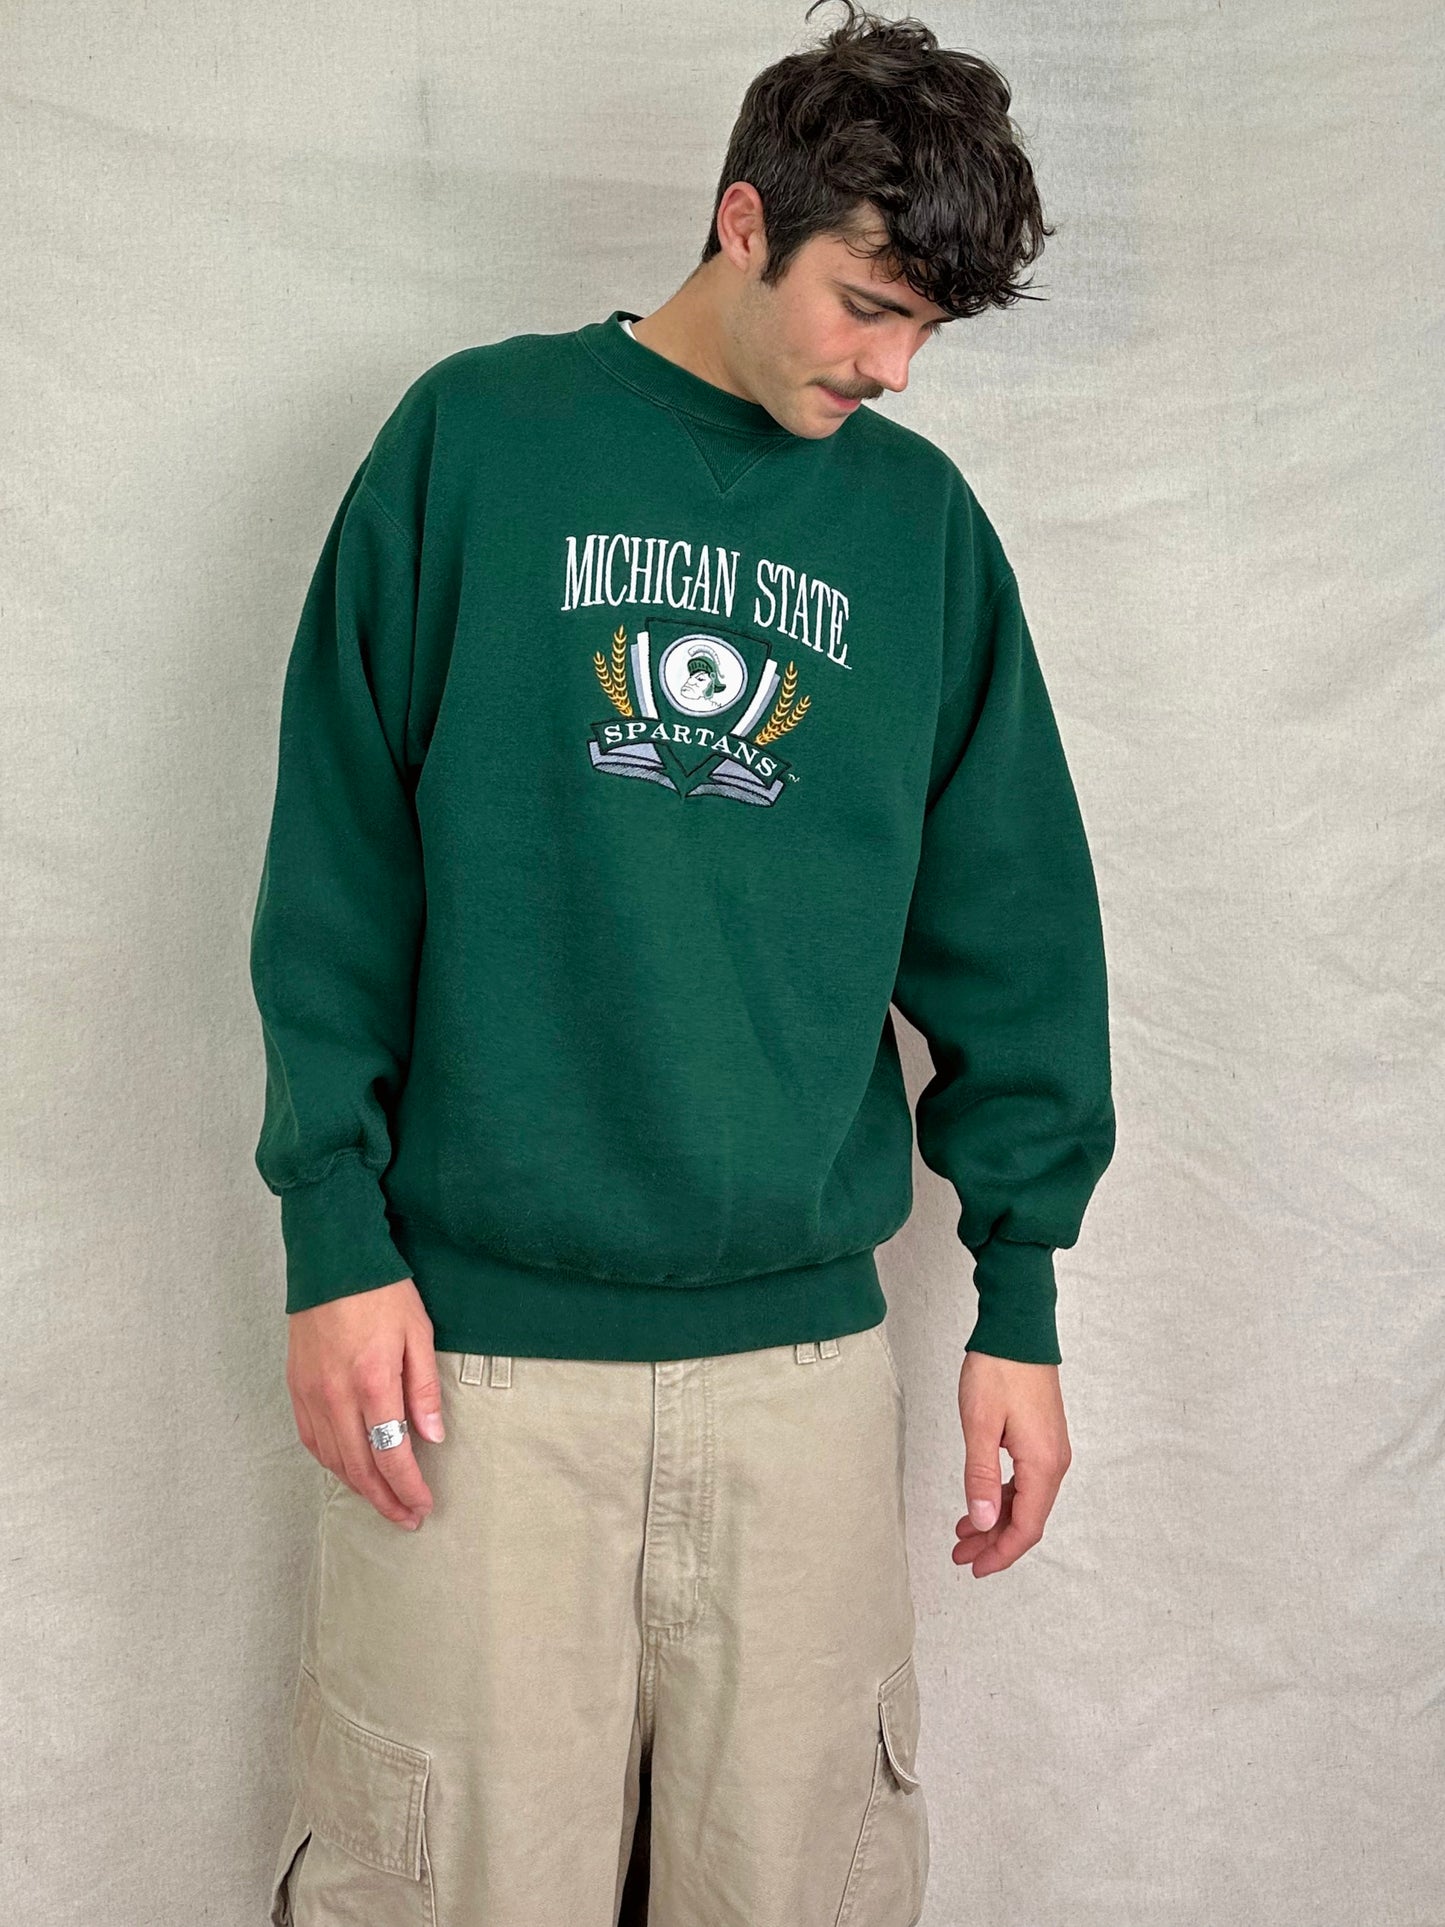 90's Michigan State Spartans Embroidered Vintage Sweatshirt Size M-L